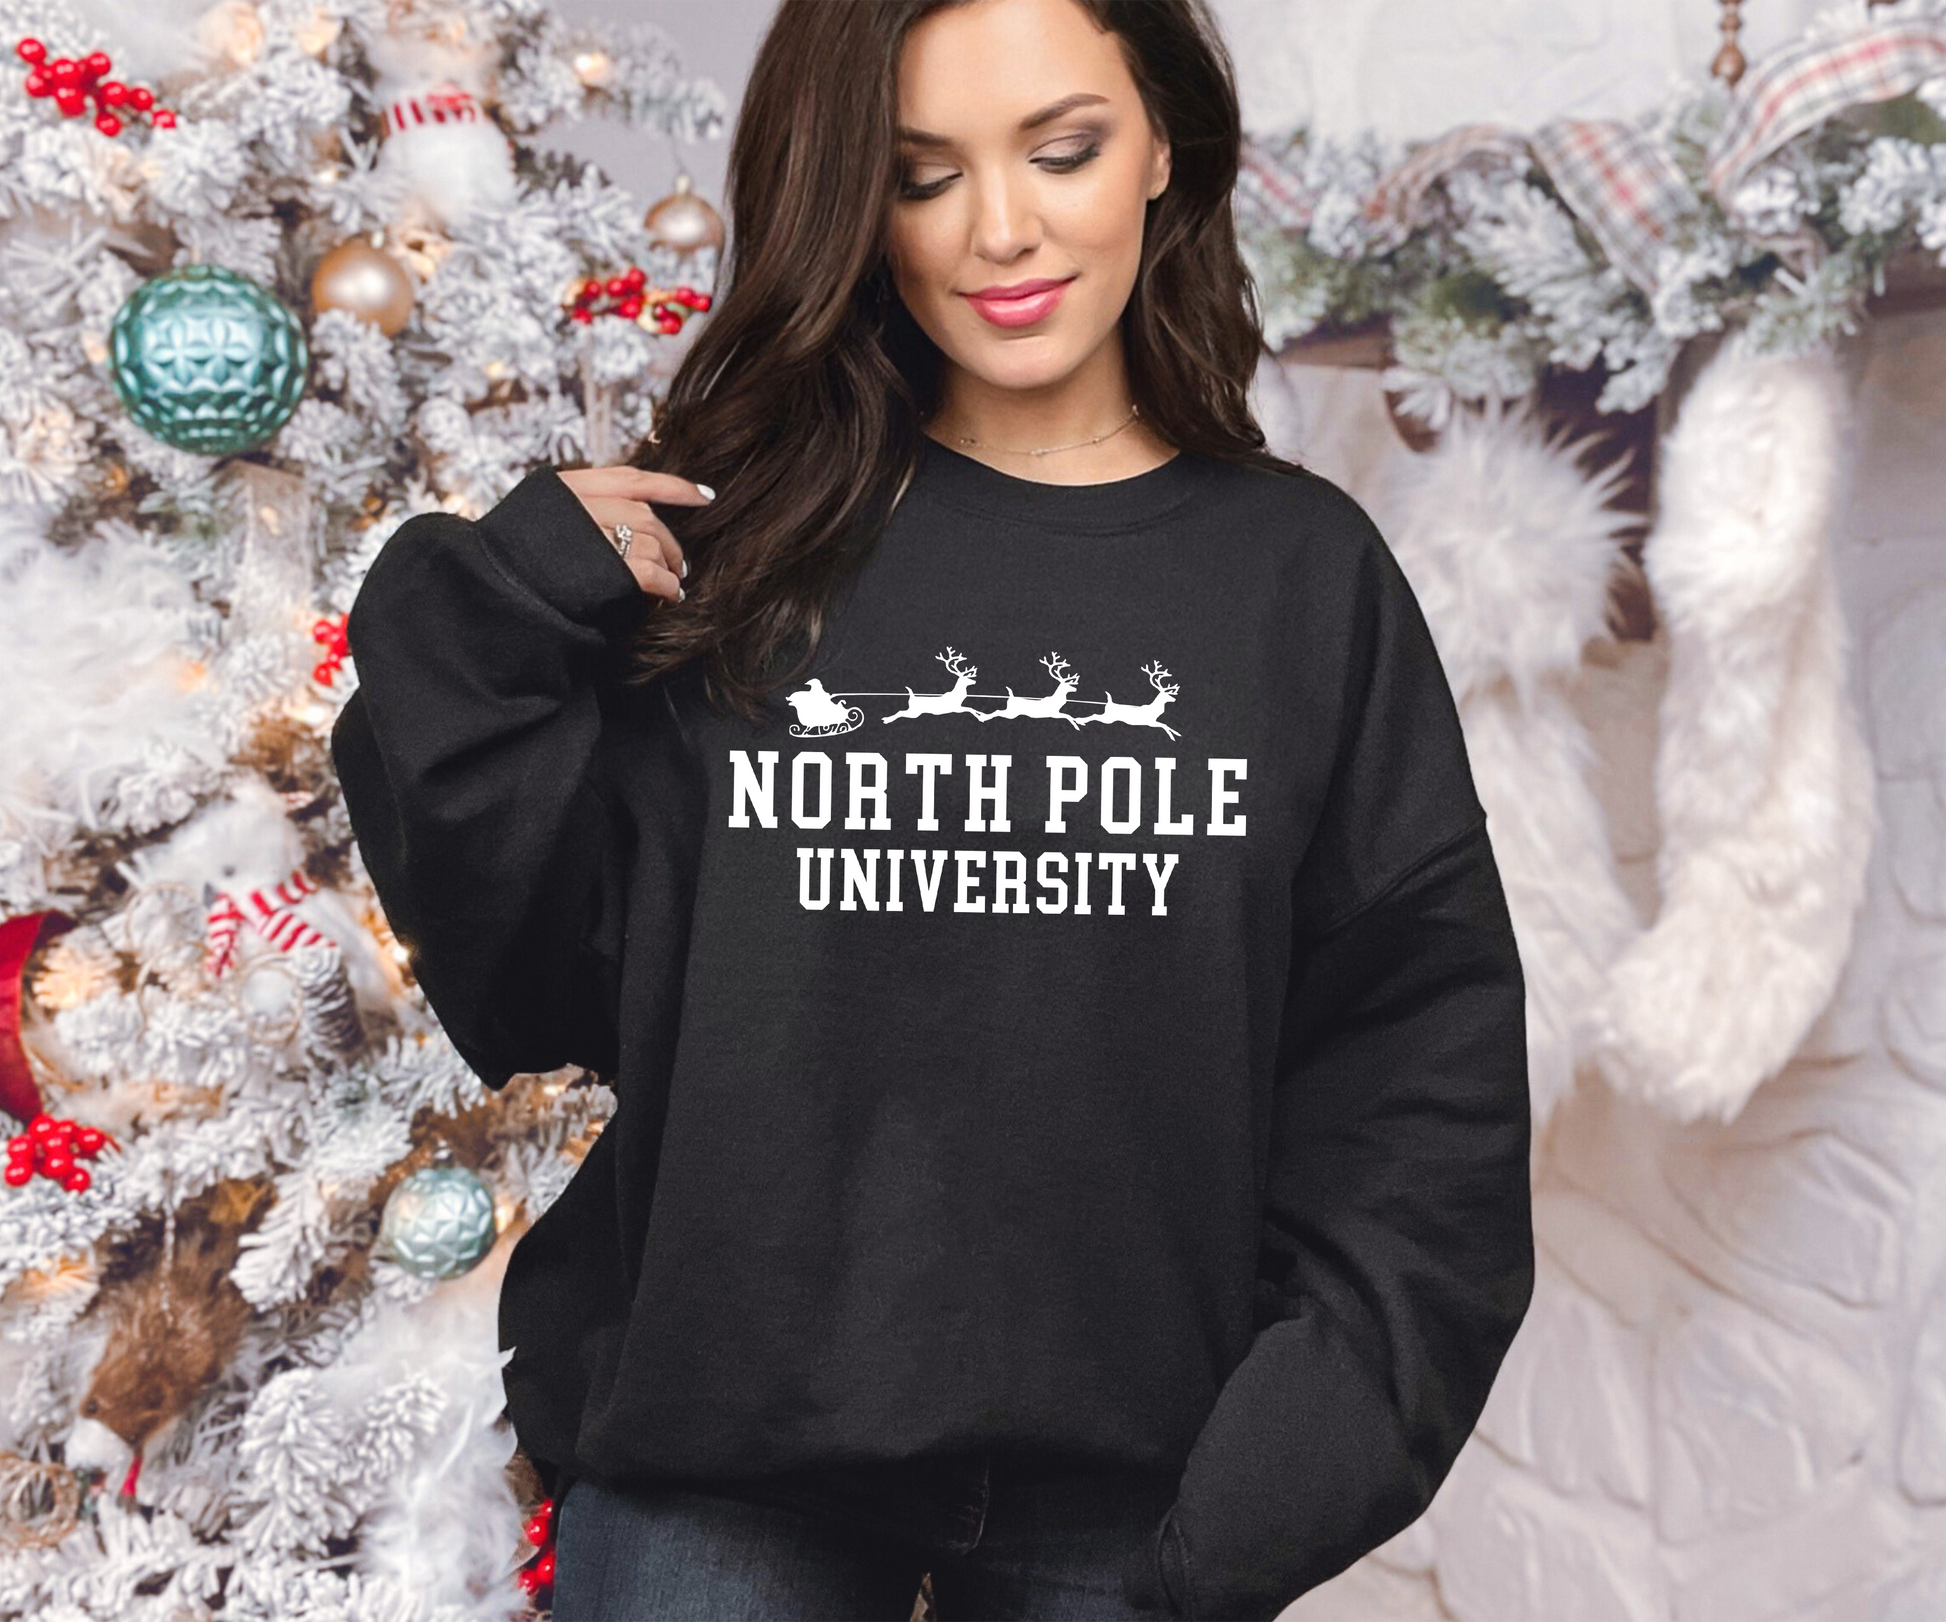 a woman wearing a black sweatshirt that says north pole university